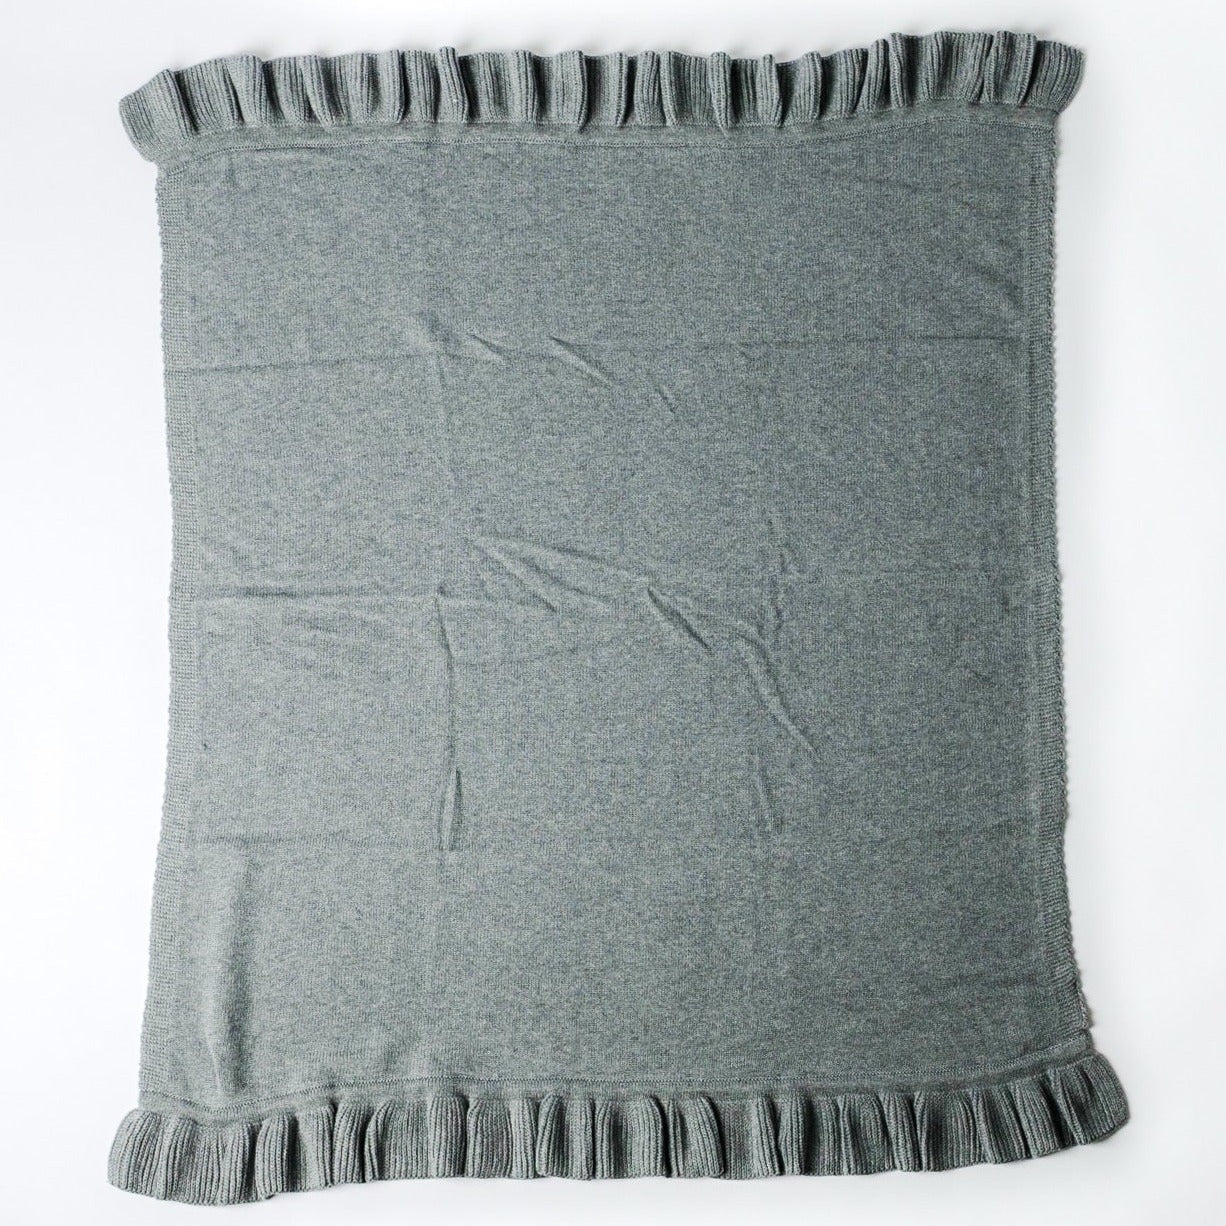 Winona Grey Baby Blanket